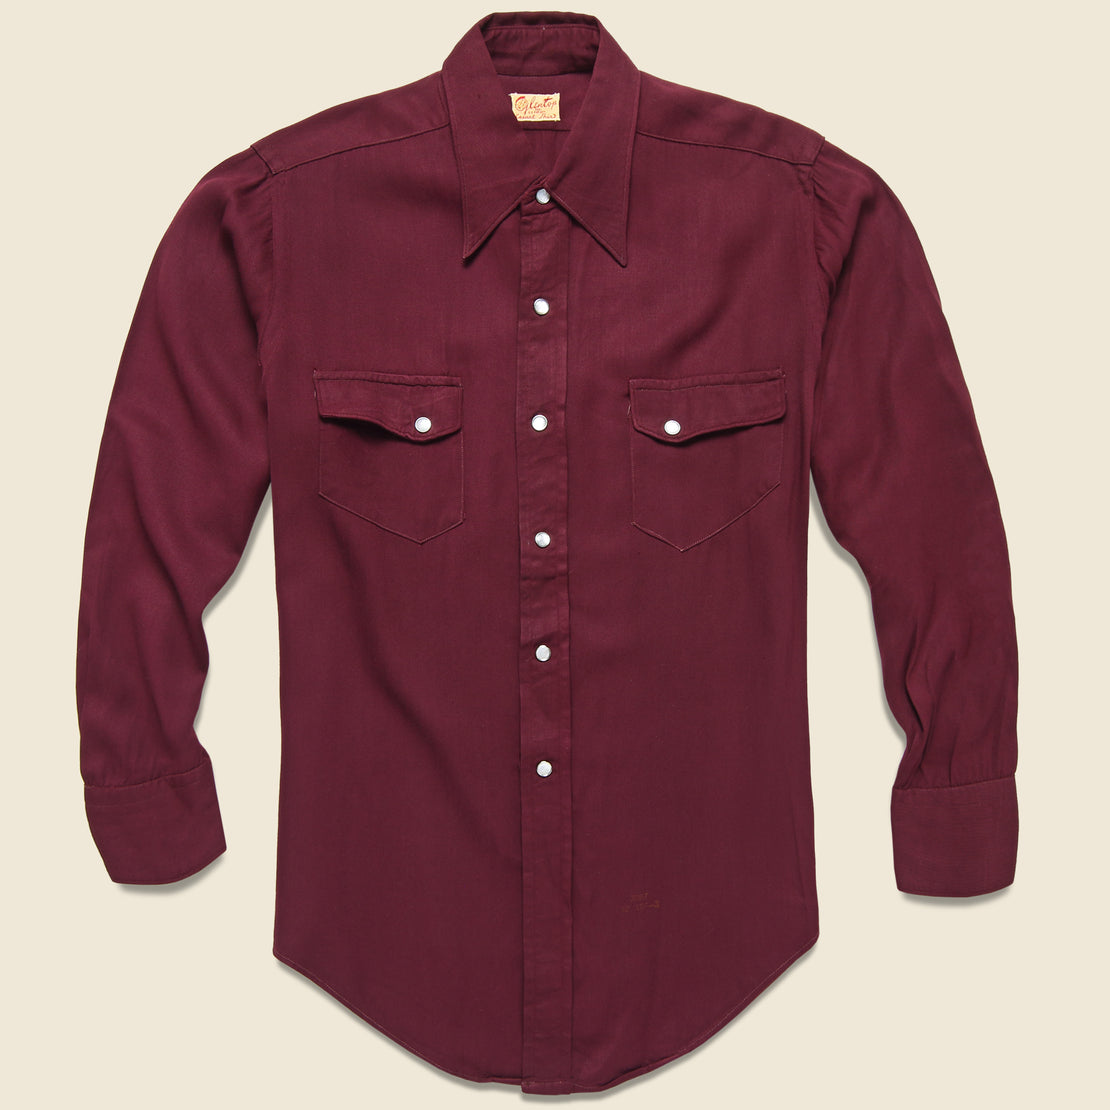 Vintage Cotton Sateen Western Shirt - Burgundy